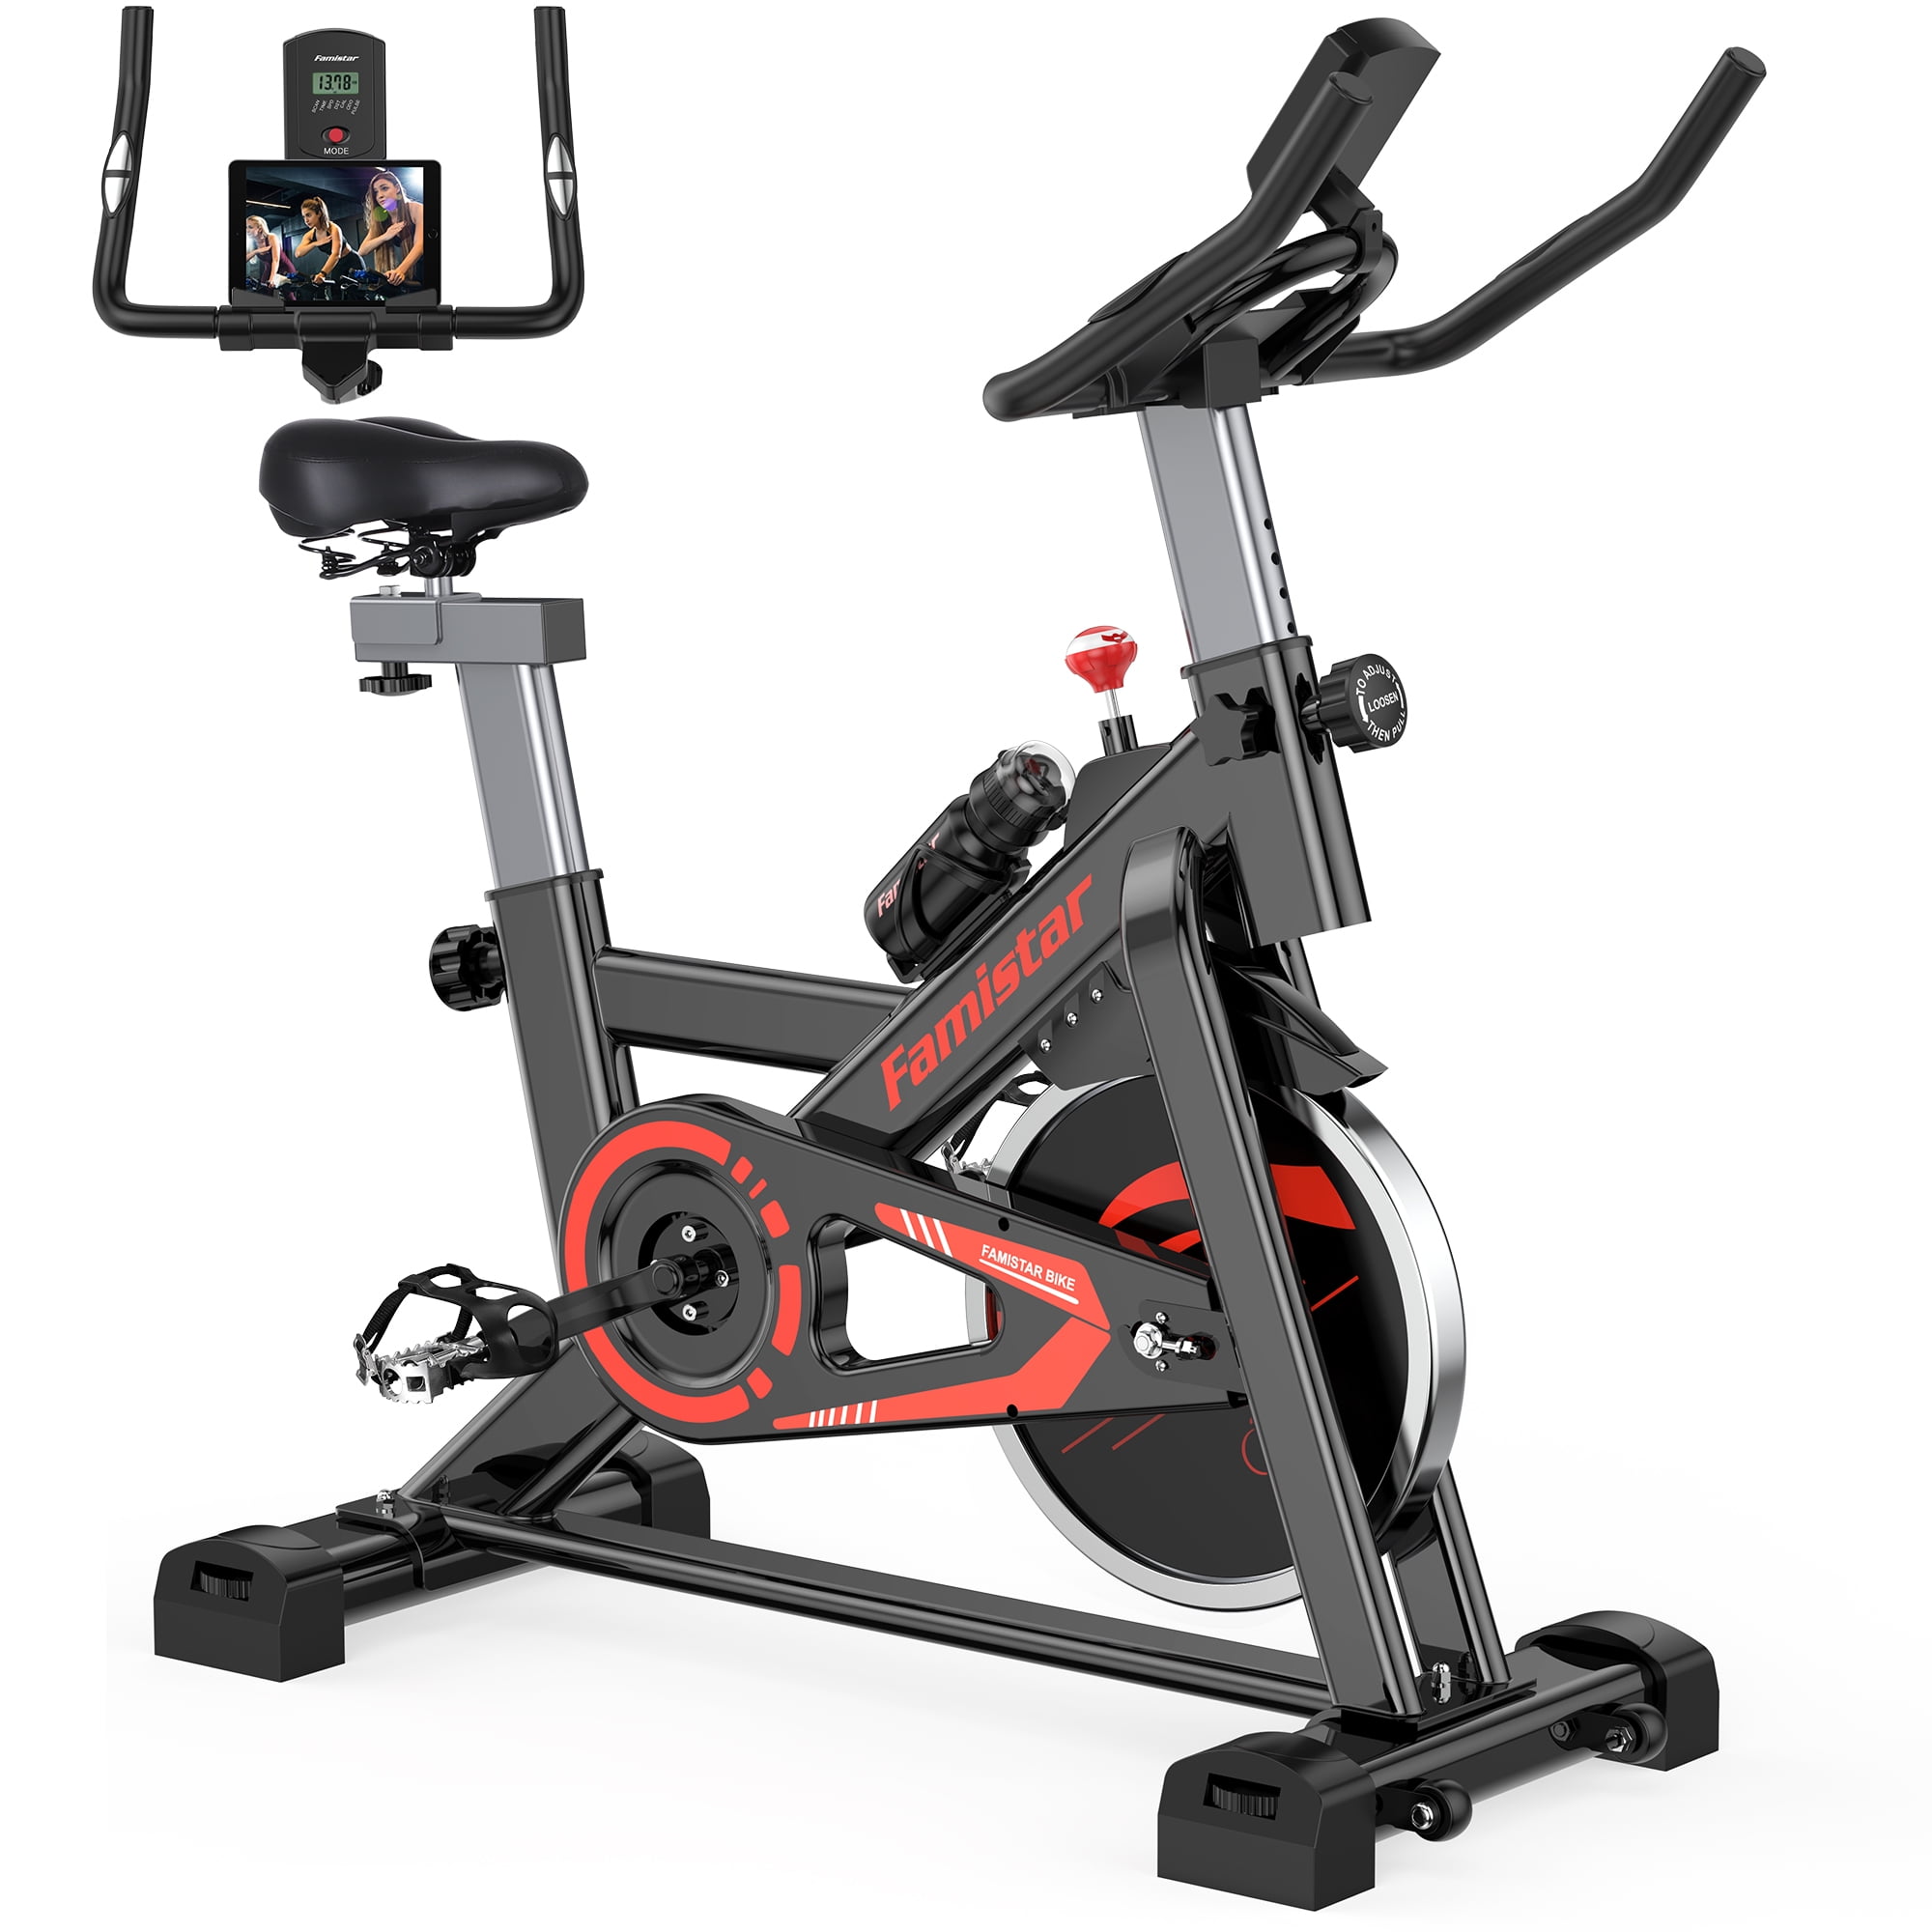 Home Indoor Cardio Exercise Bike Gym Aerobic Fitness Training Flywheel Bicycle 